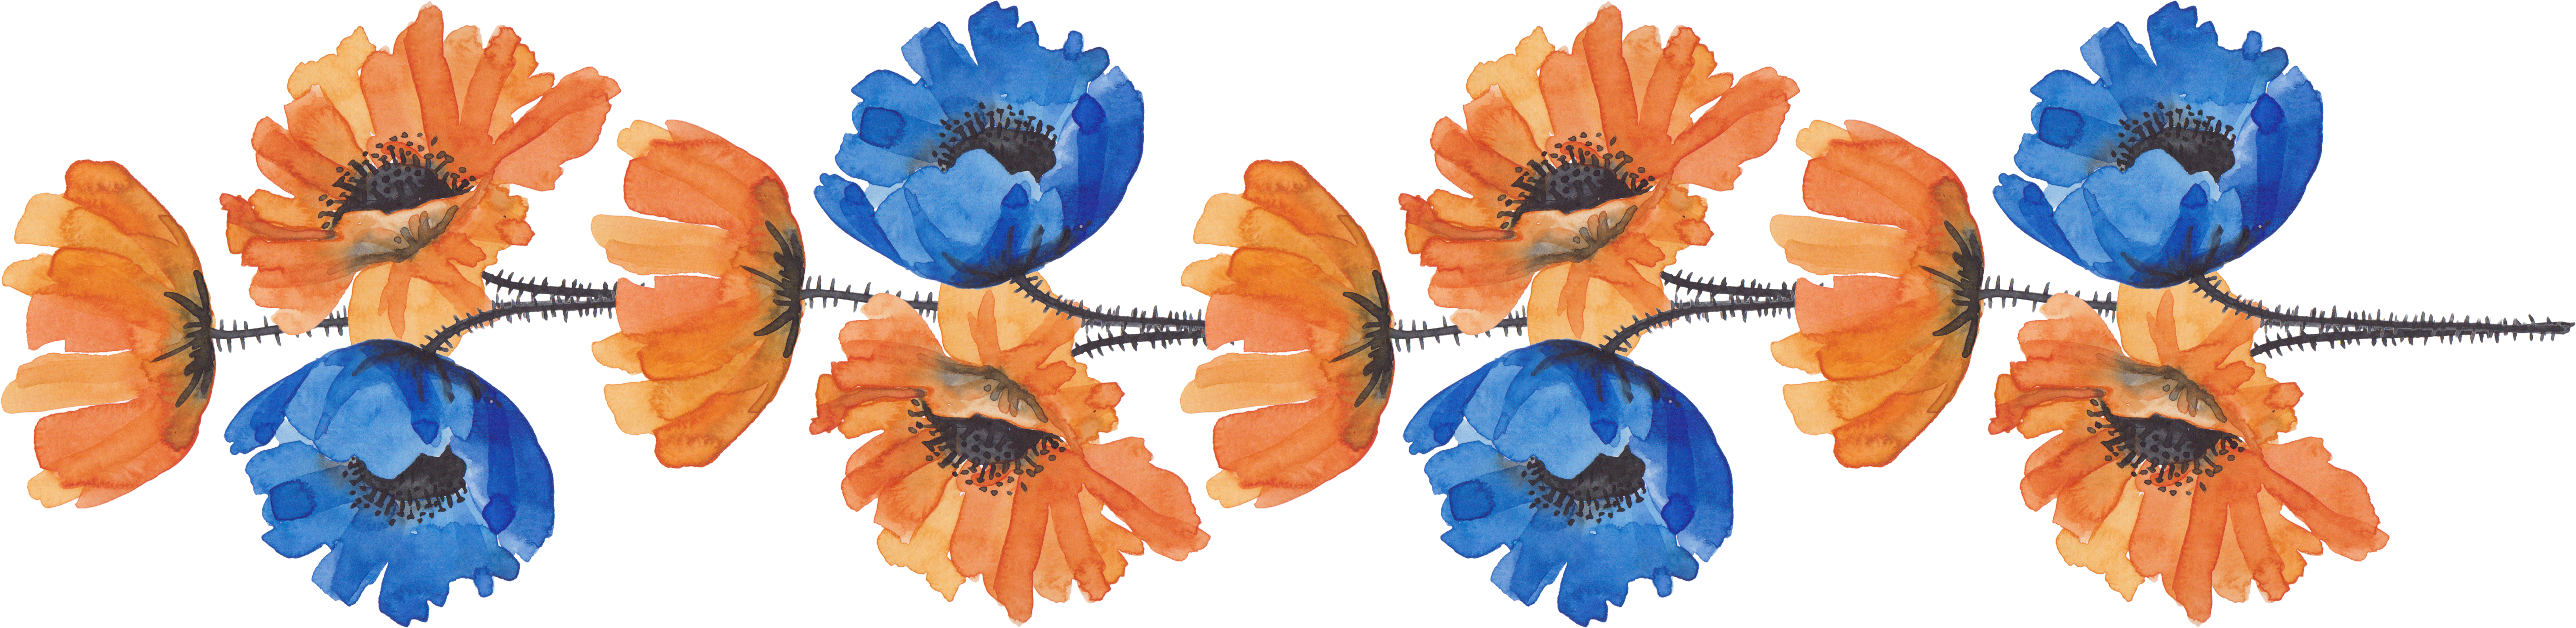 Border Flowers Cut Flowers - Orange And Blue Flower Border (5727x1396)